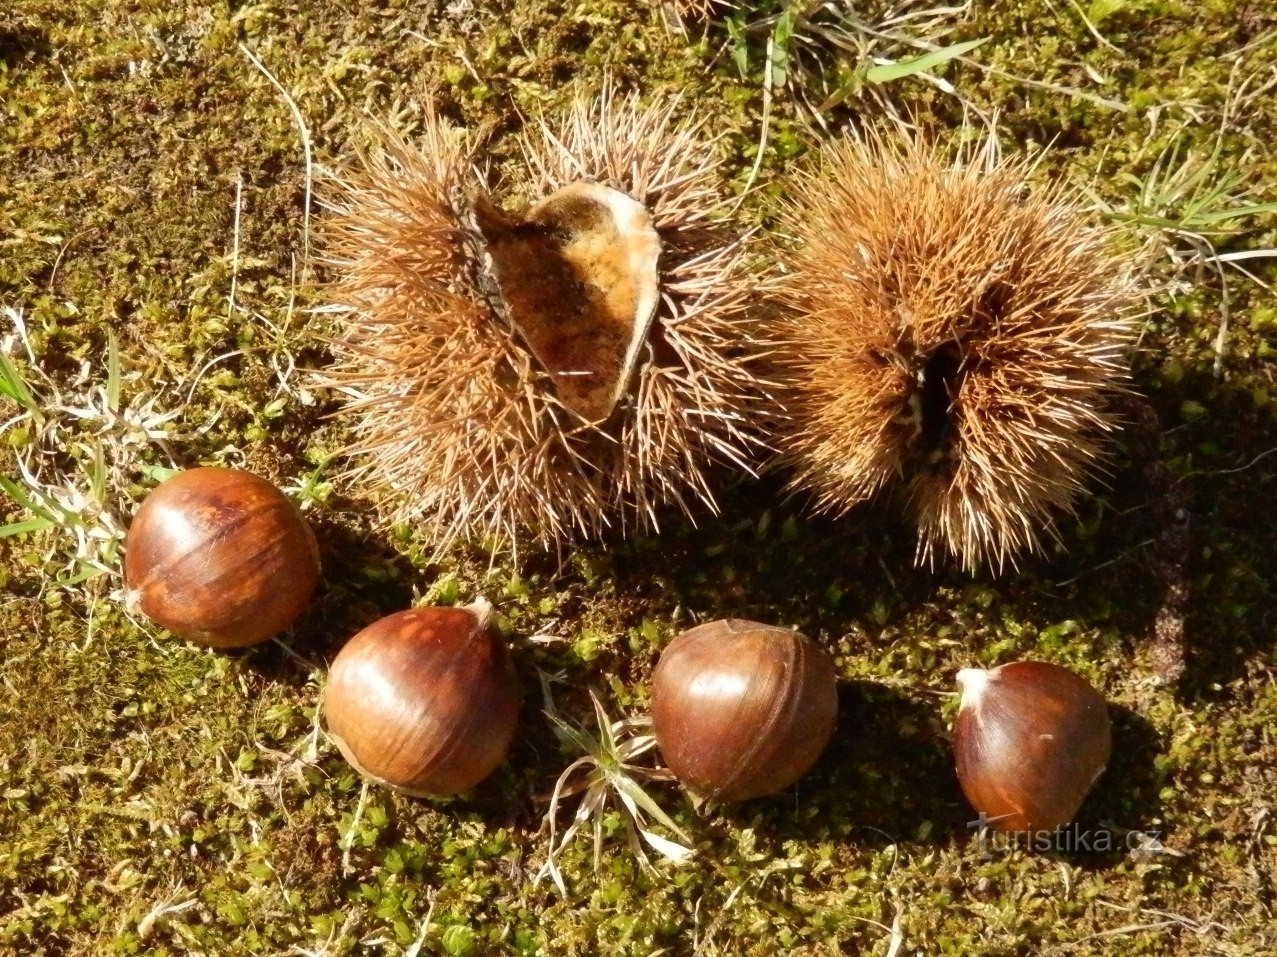 Chestnut fruits - edible chestnuts (arranged)